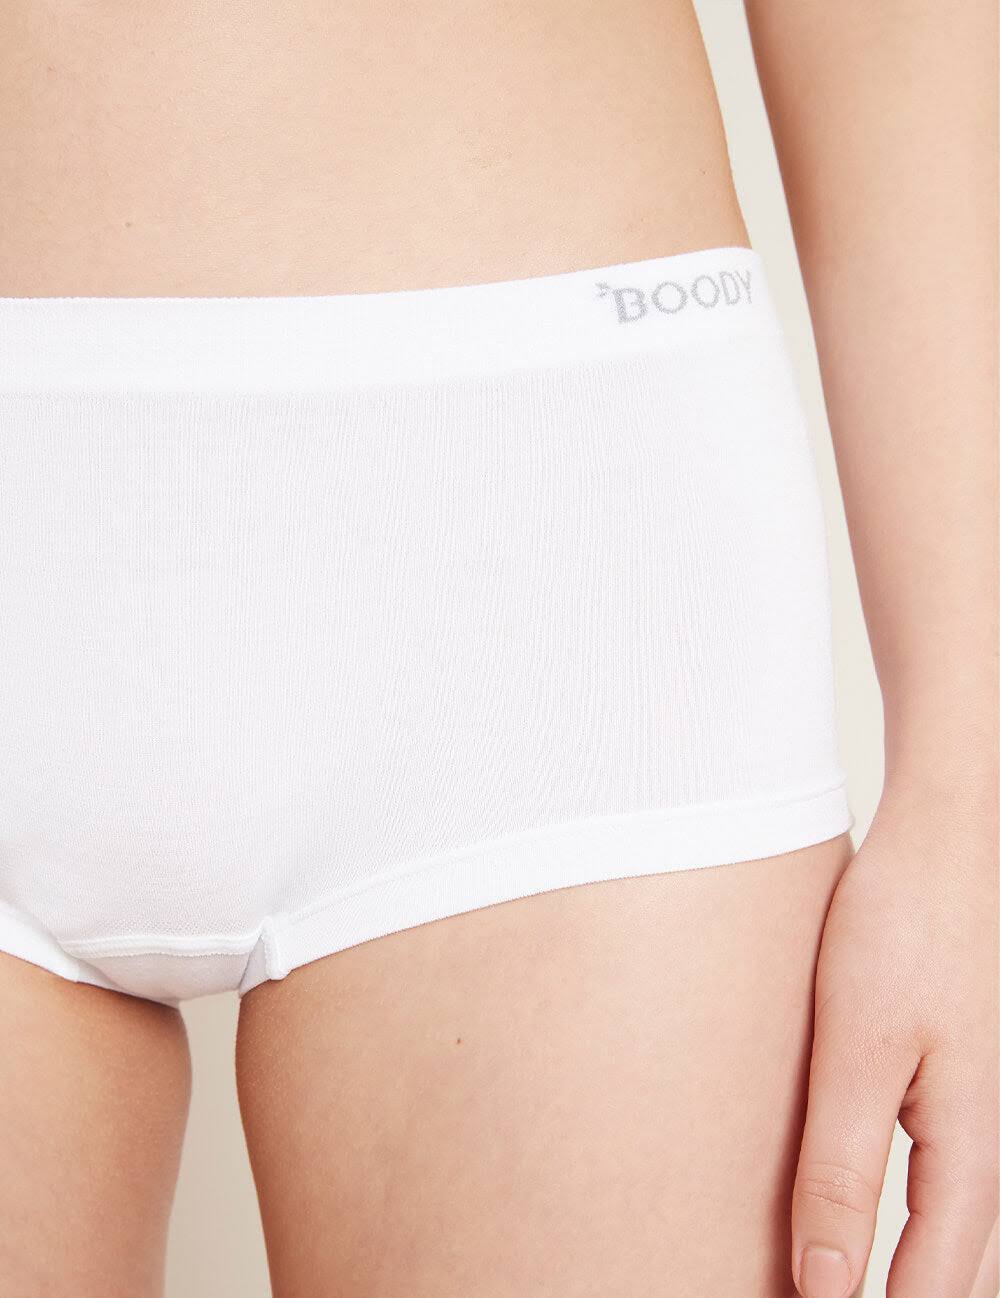 Boody Women’s Bamboo Boy Leg Underwear - White, Small-Medium